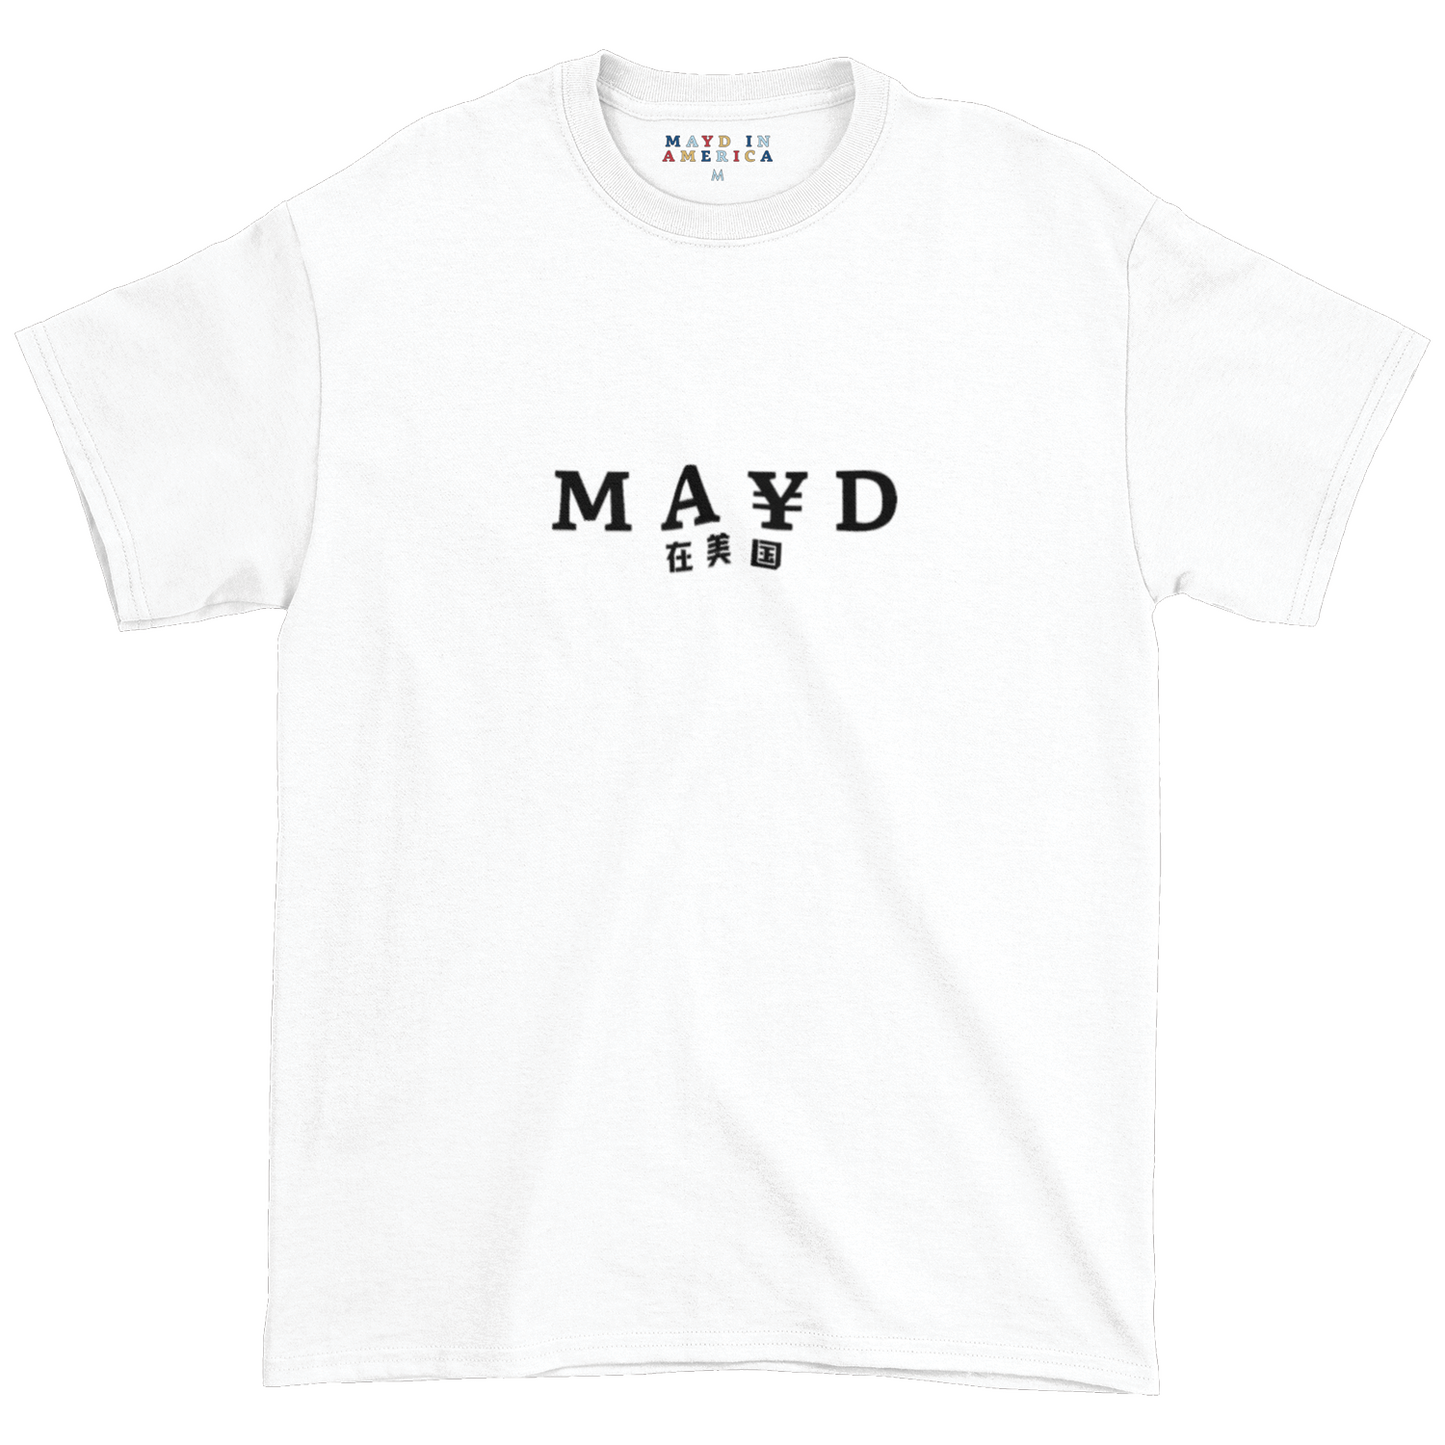 MAYD in America T-shirt